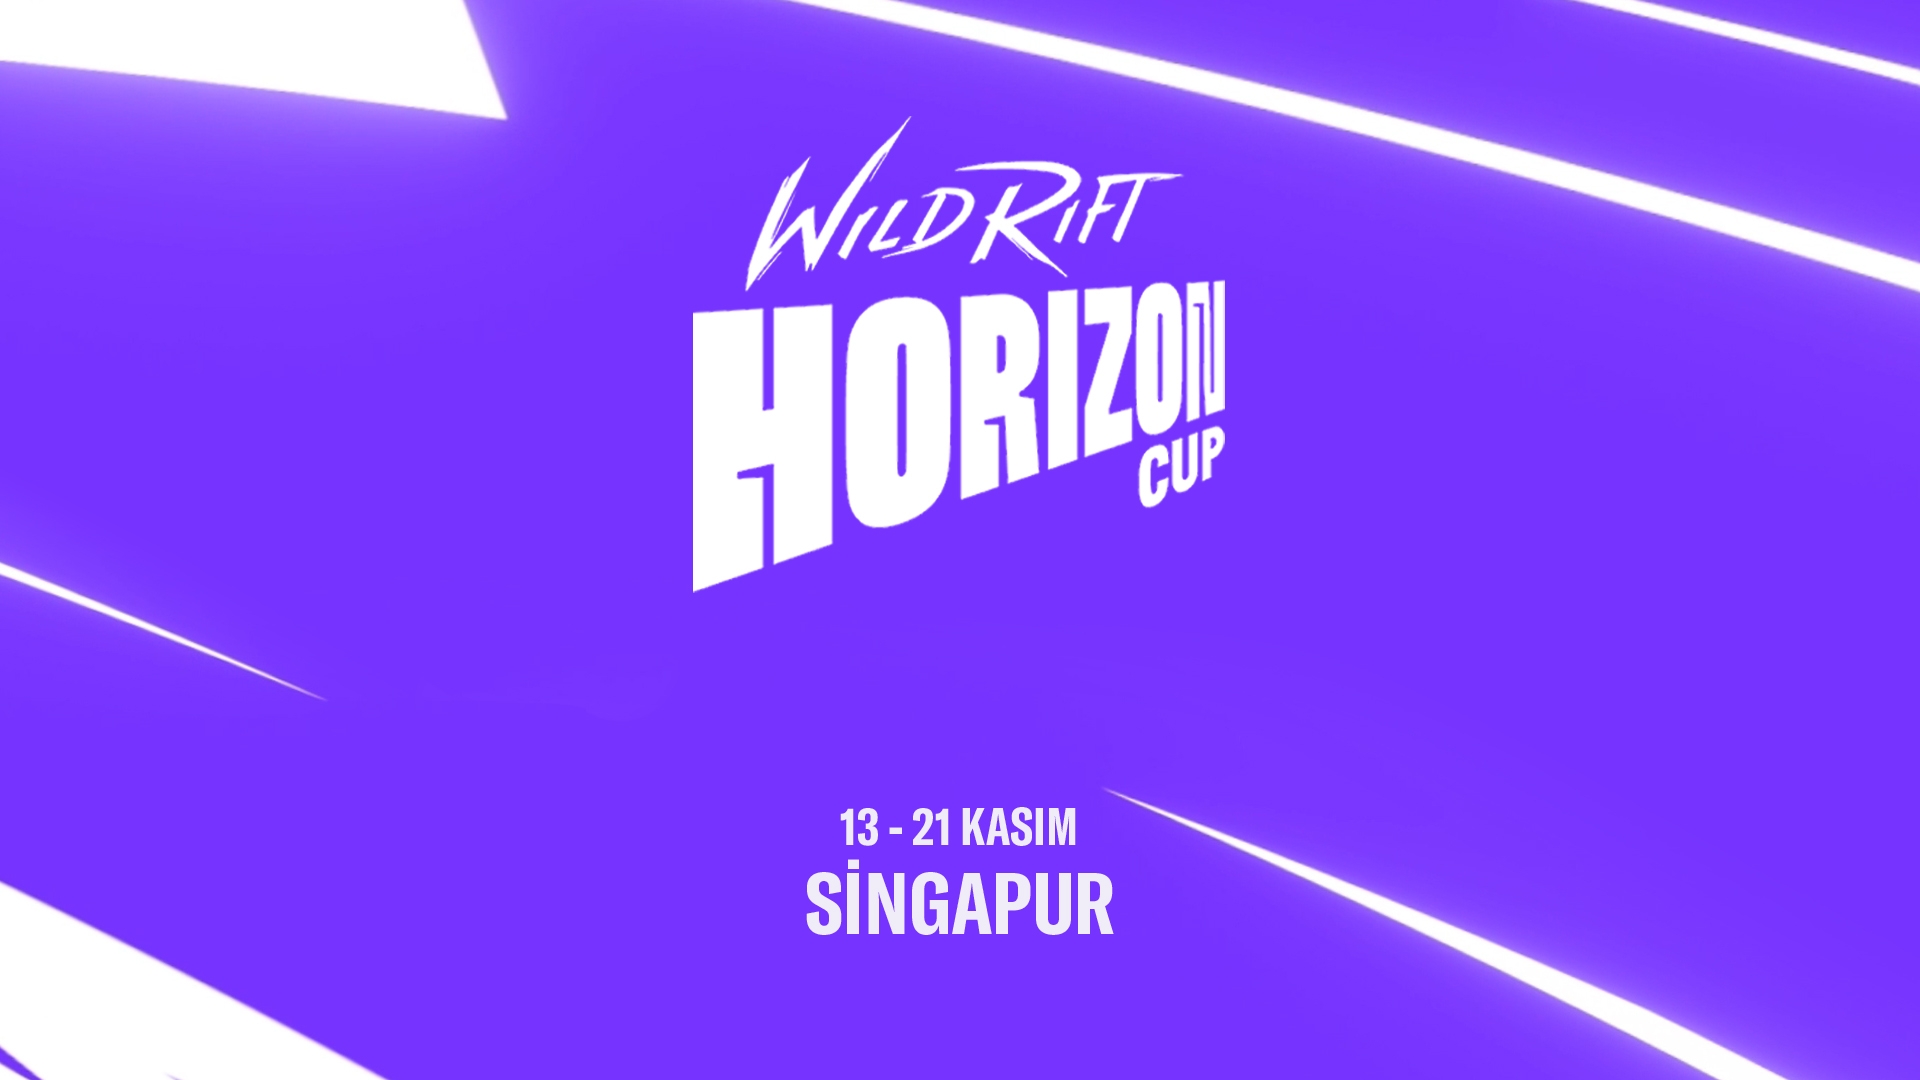 Wild Rift Horizon Cup